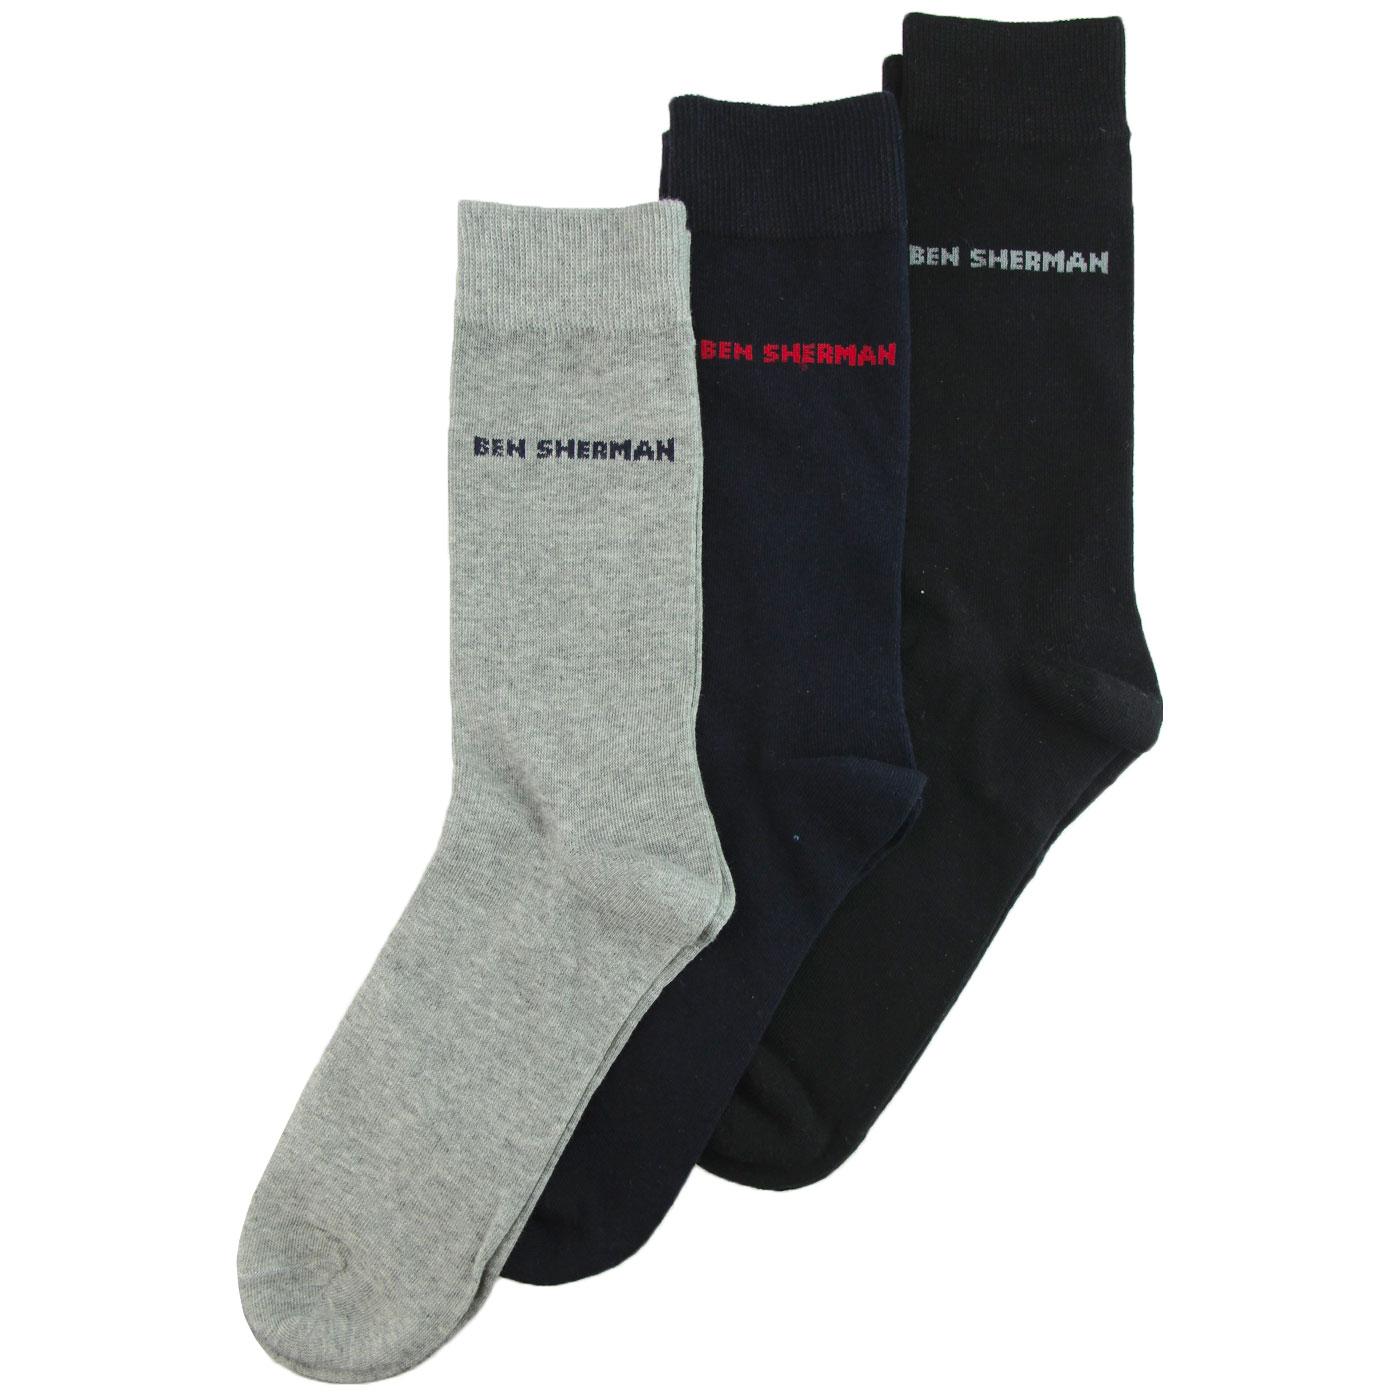 Hedgehunter BEN SHERMAN 3 Pack Signature Socks